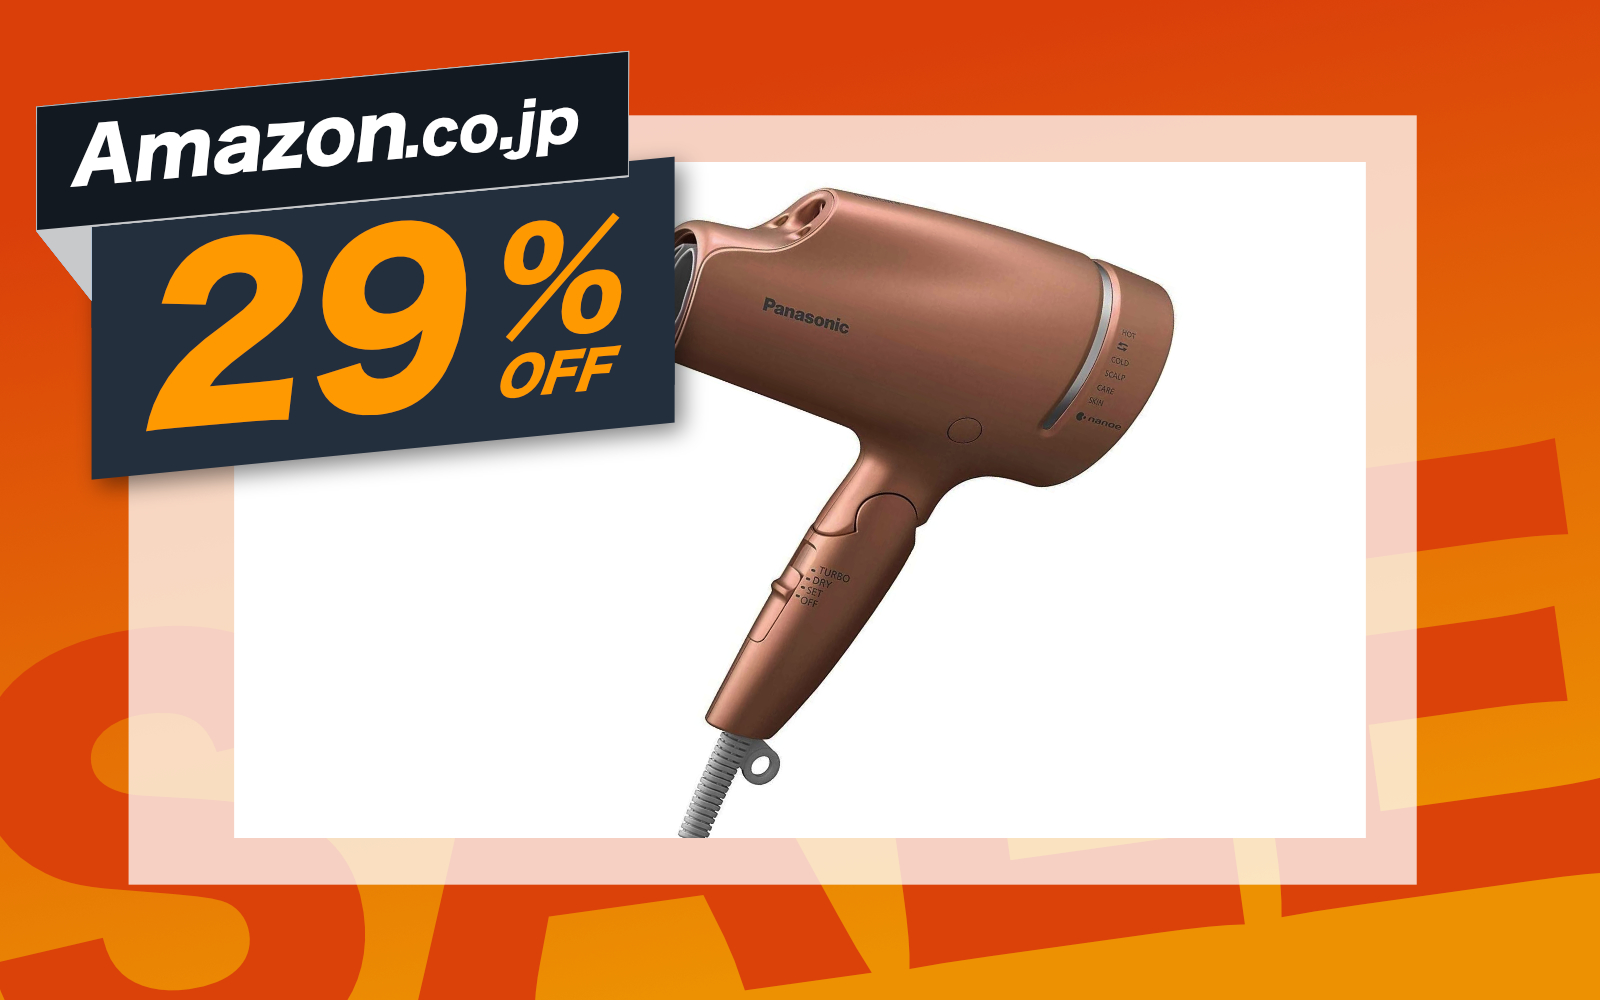 Panasonic nanocare hair dryer is on sale